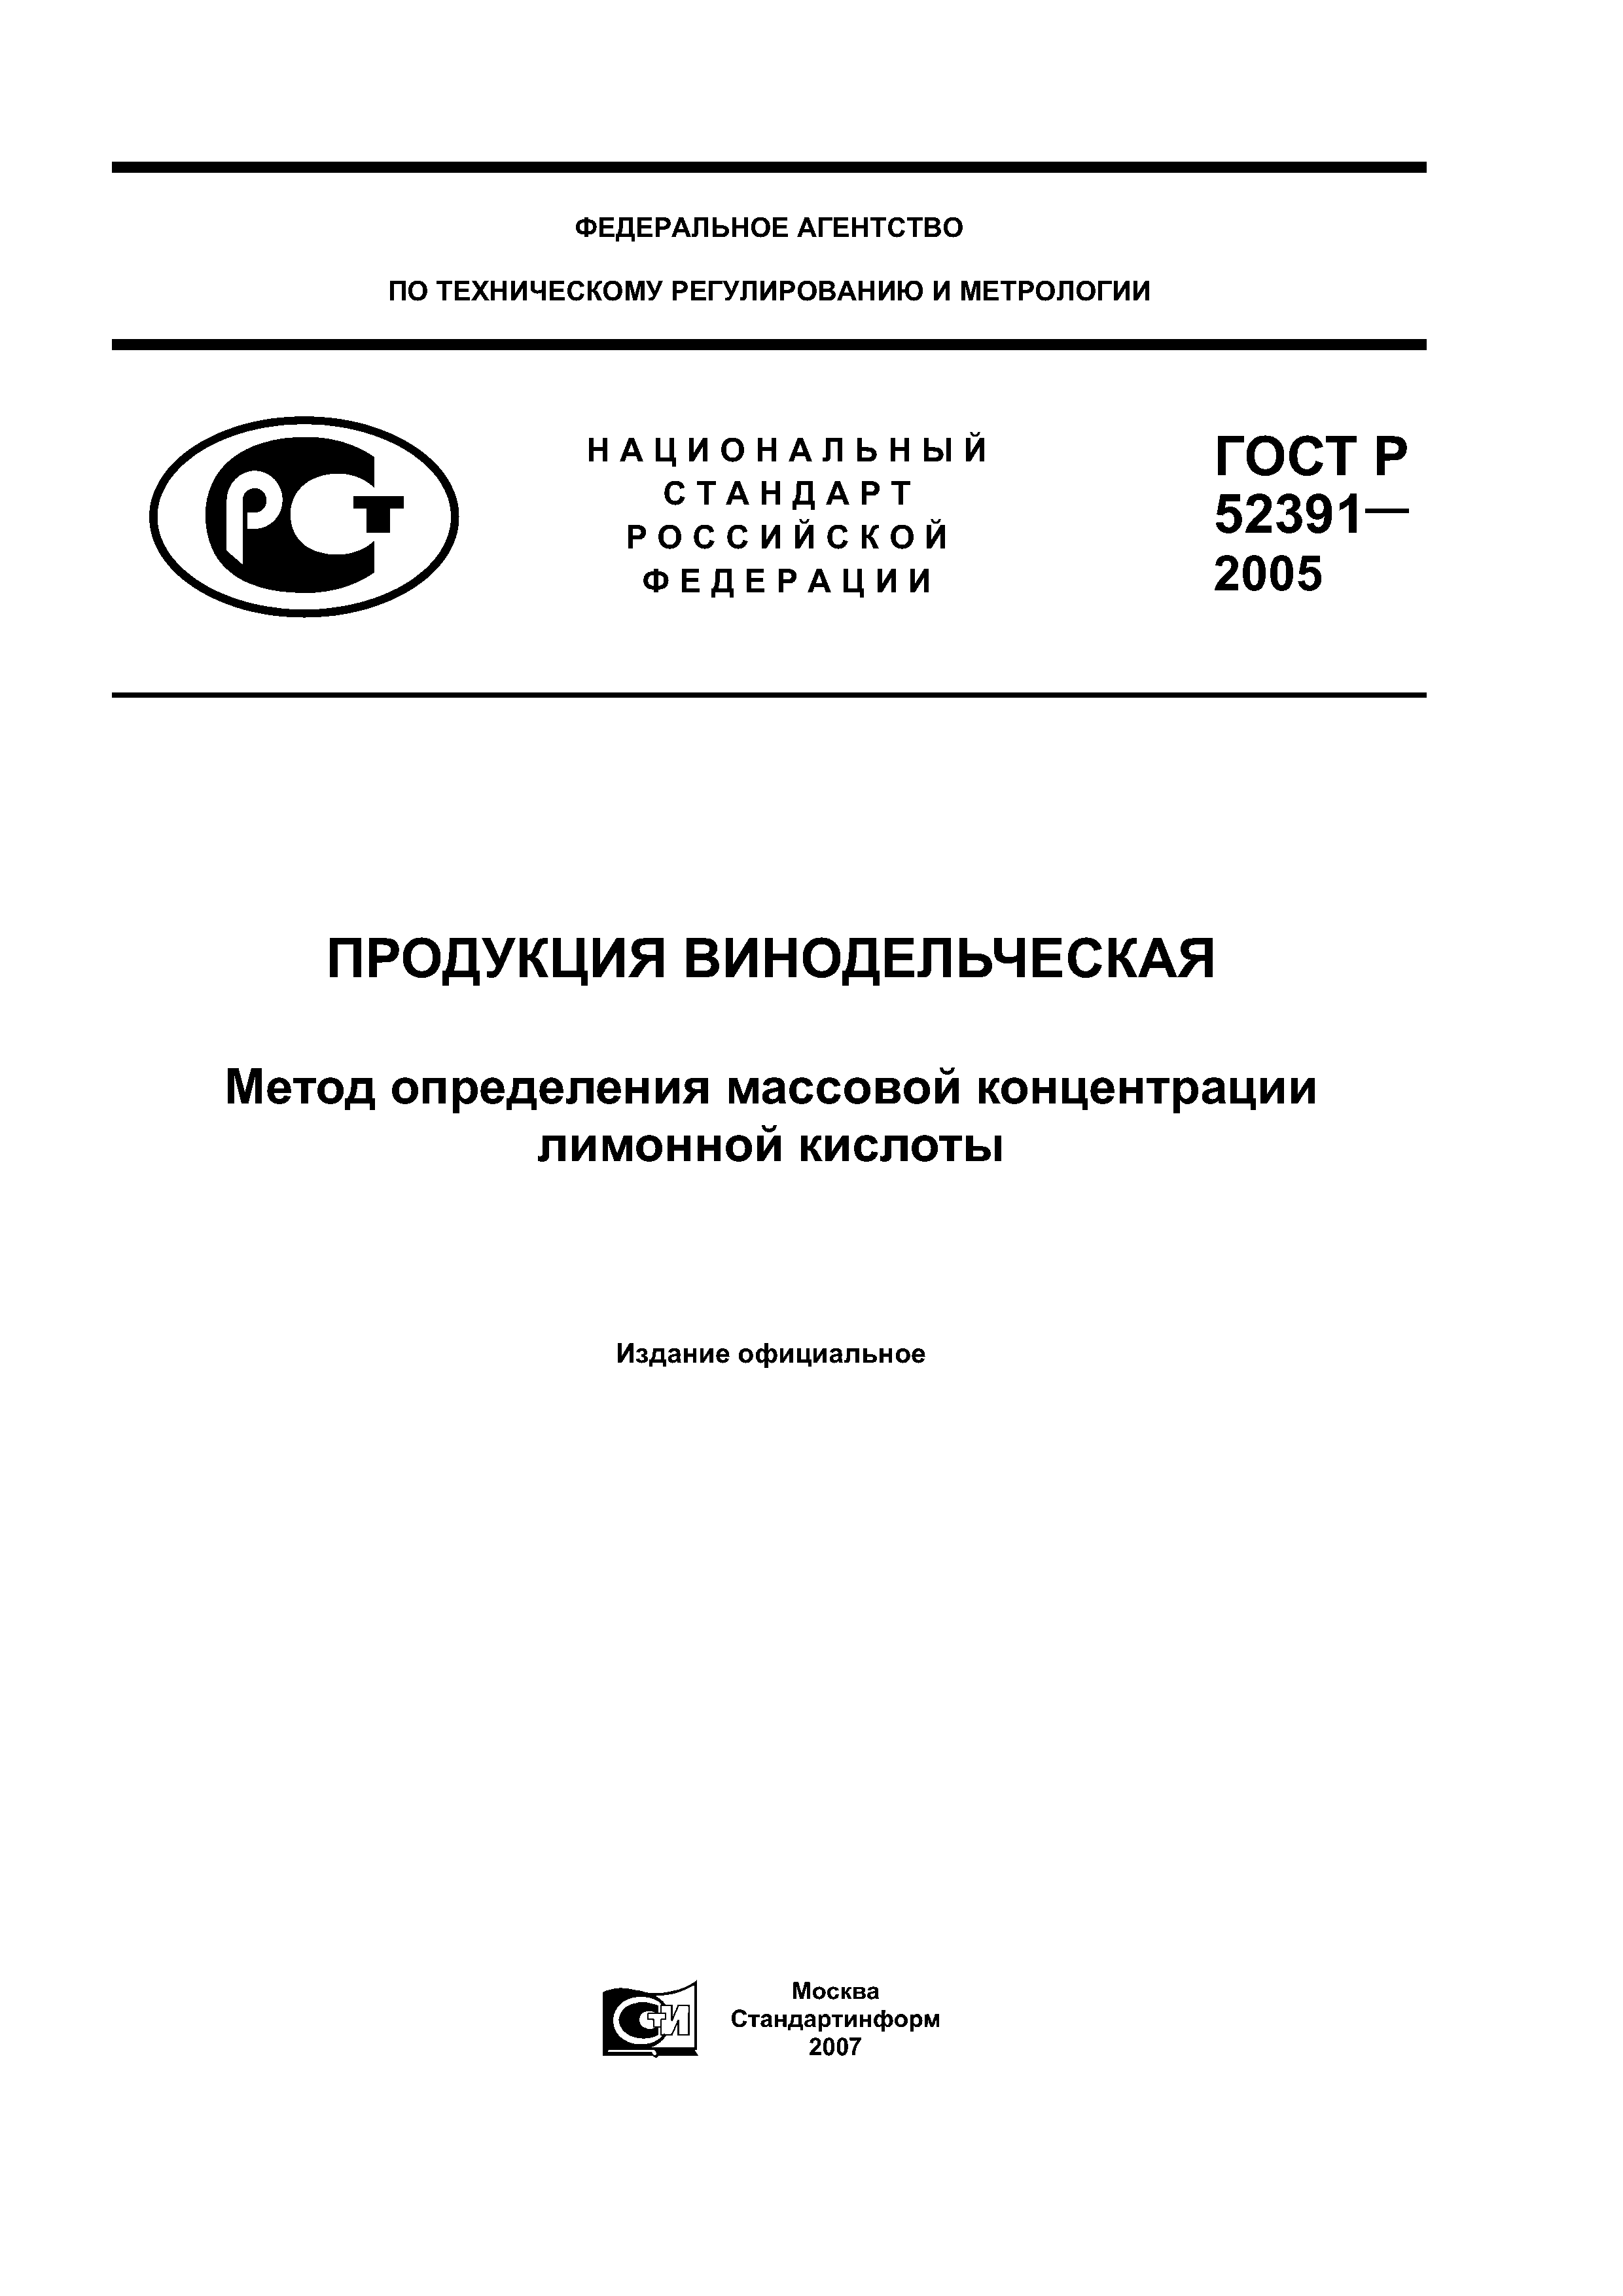 ГОСТ Р 52391-2005